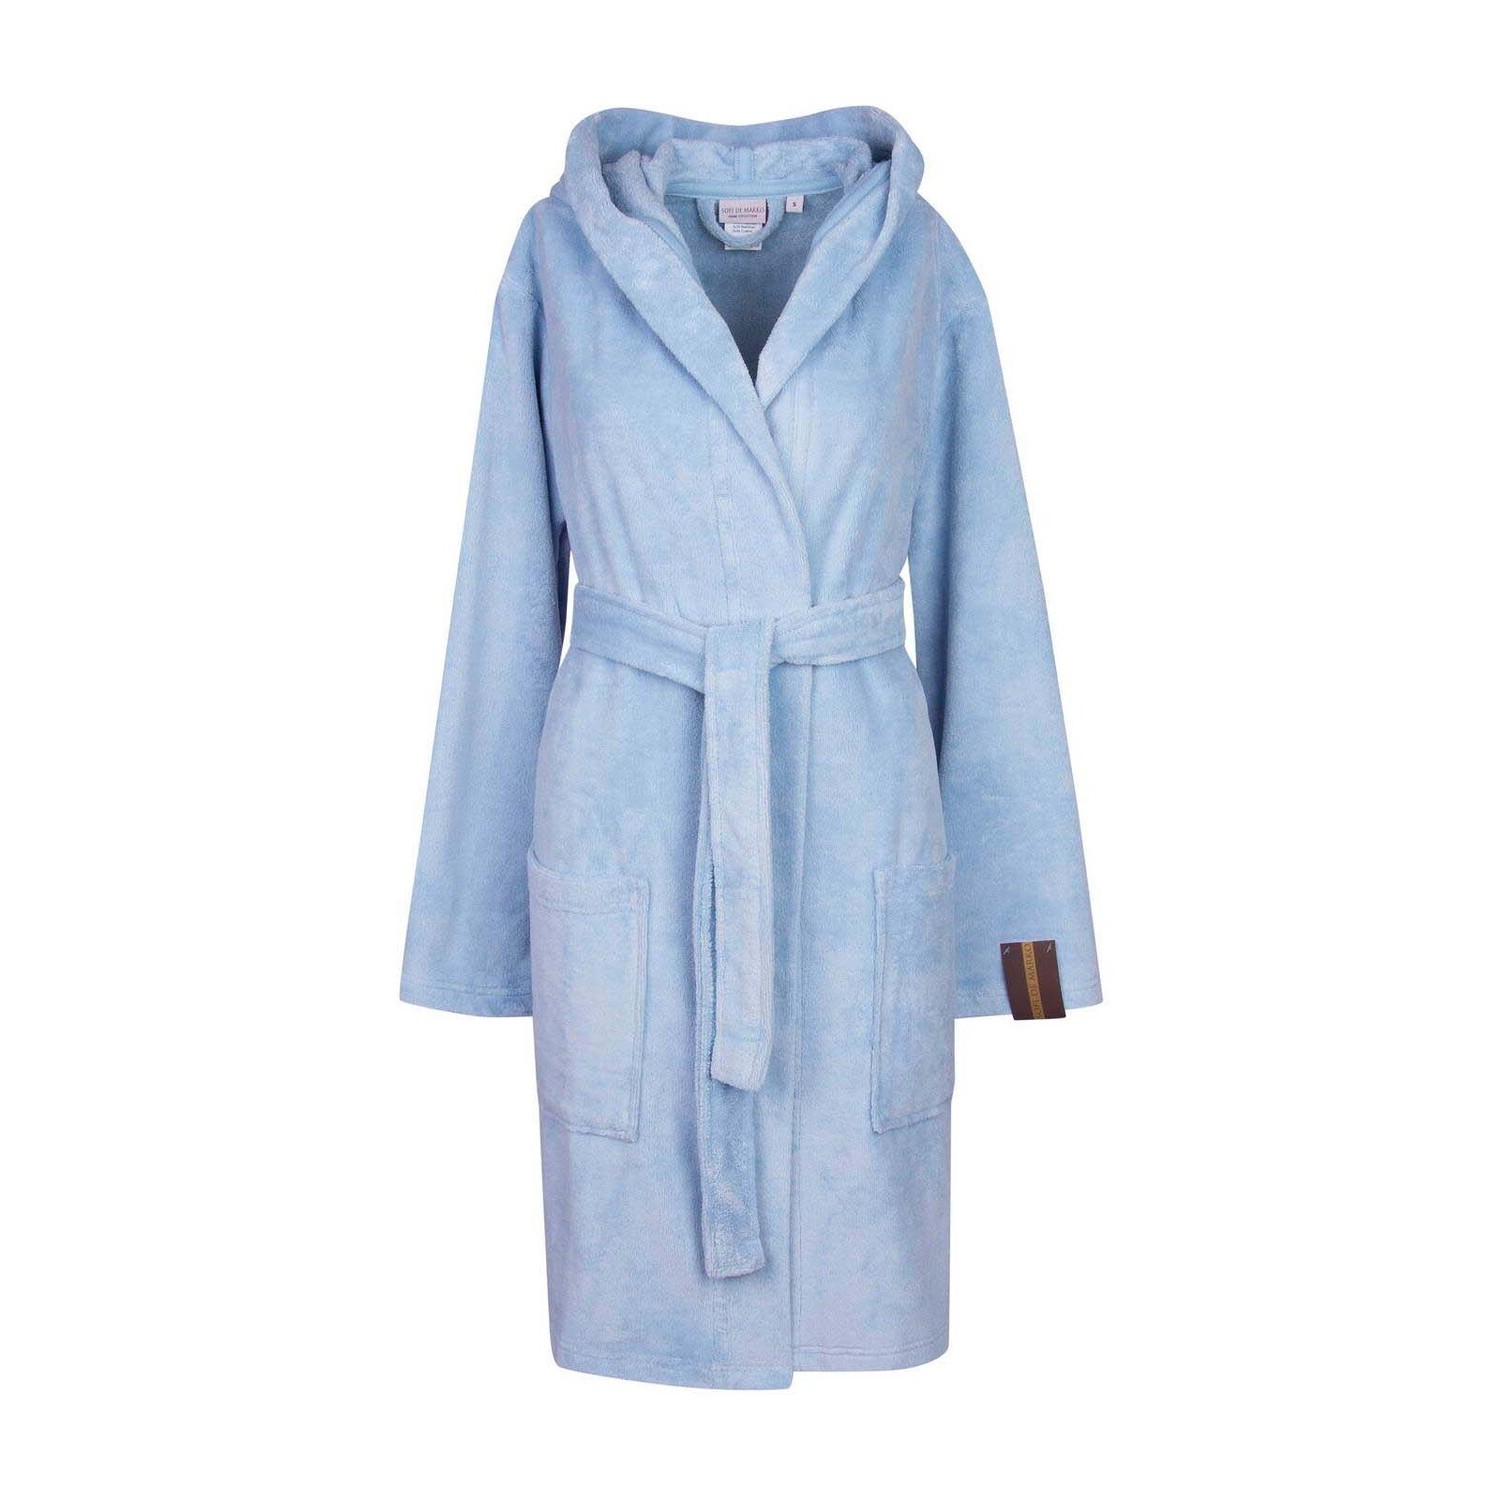 Банный халат Шанти цвет: голубой (L)